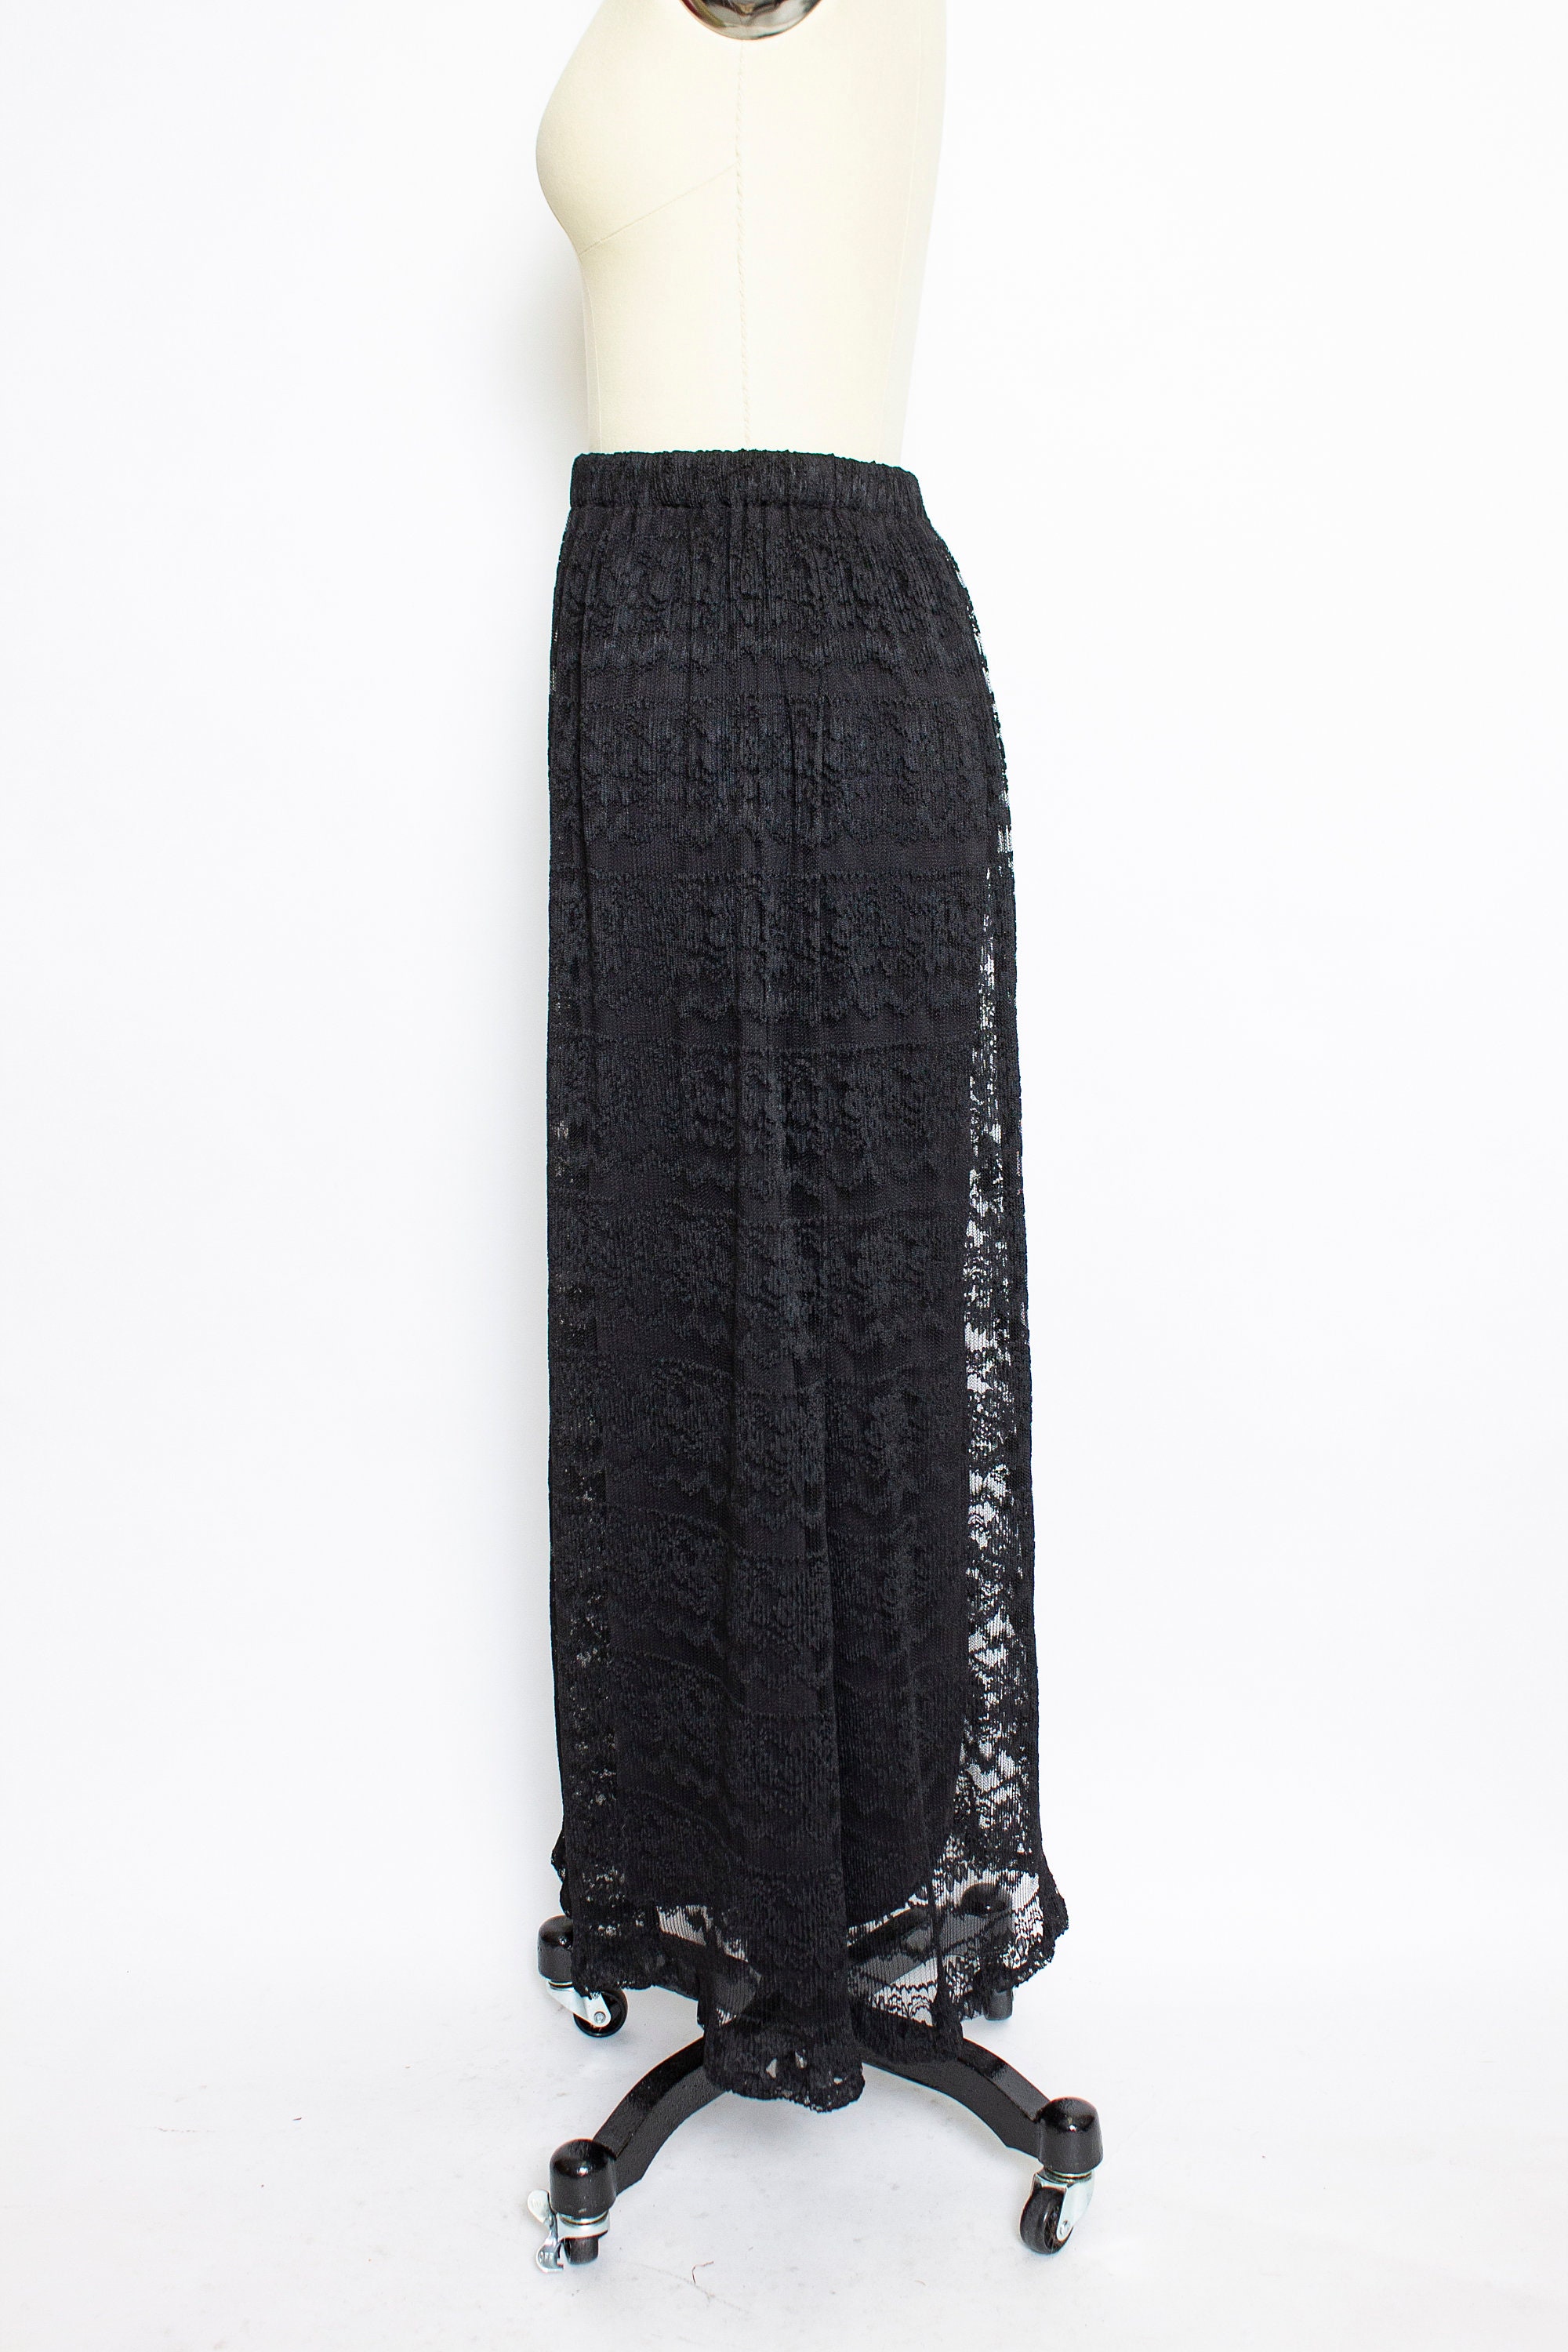 1980s VICTOR COSTA Skirt Black Lace Full S - Etsy